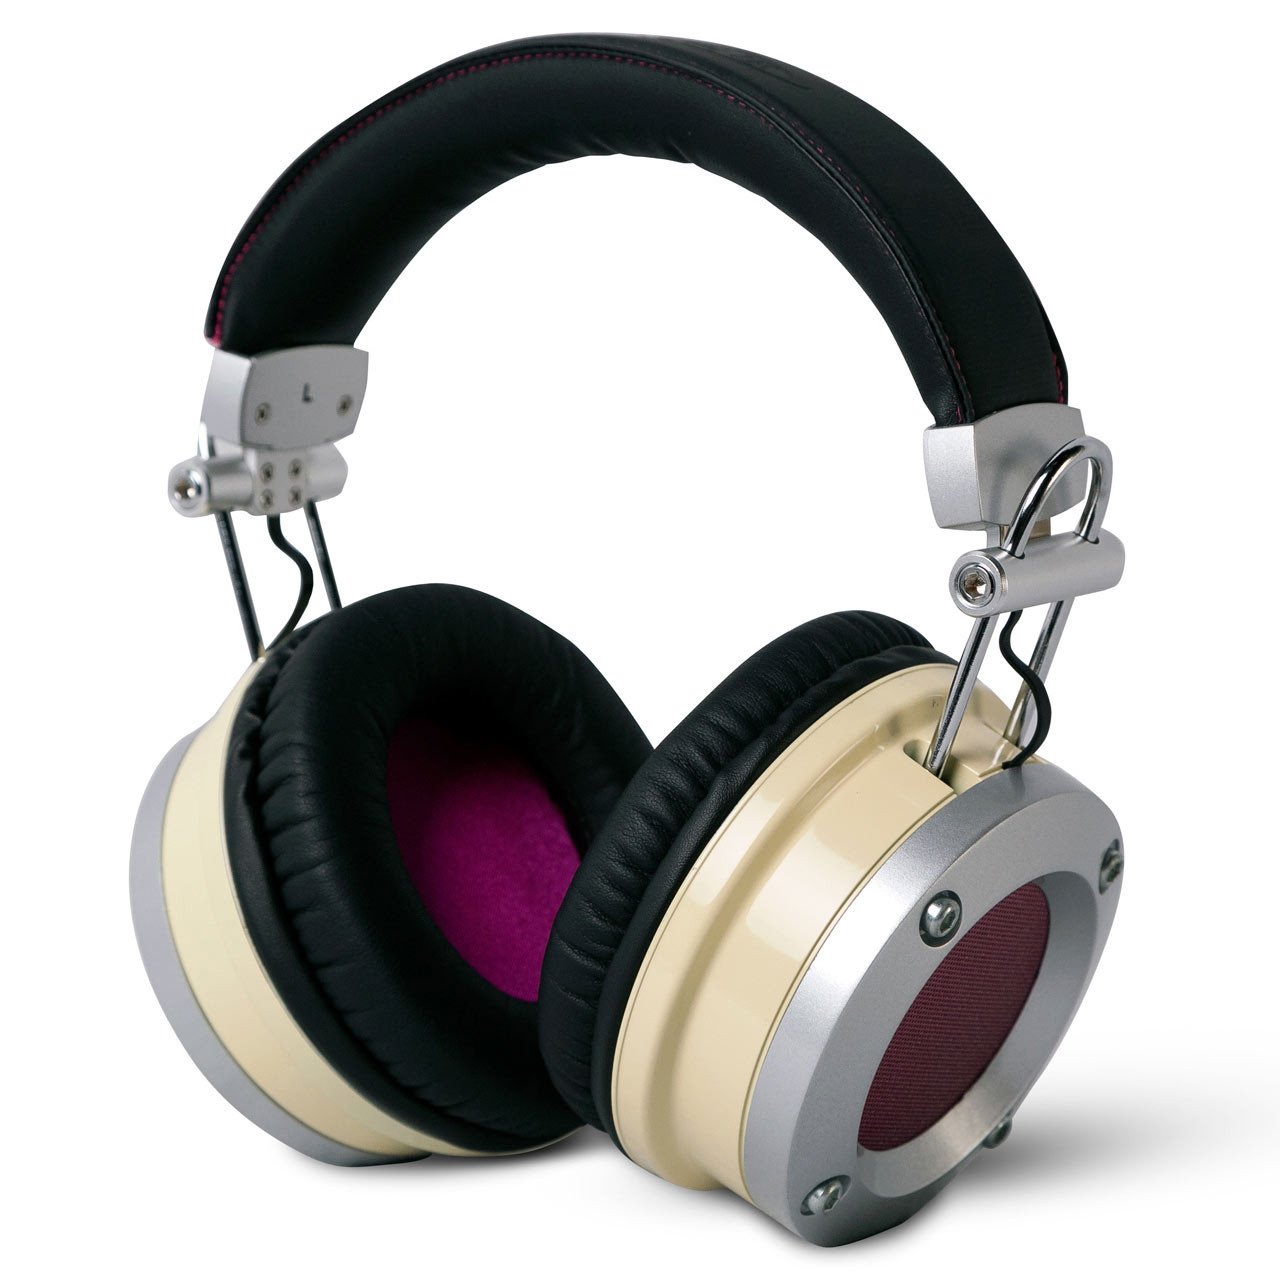 Open Headphones - Avantone Pro MP1 Mixphone Headphones